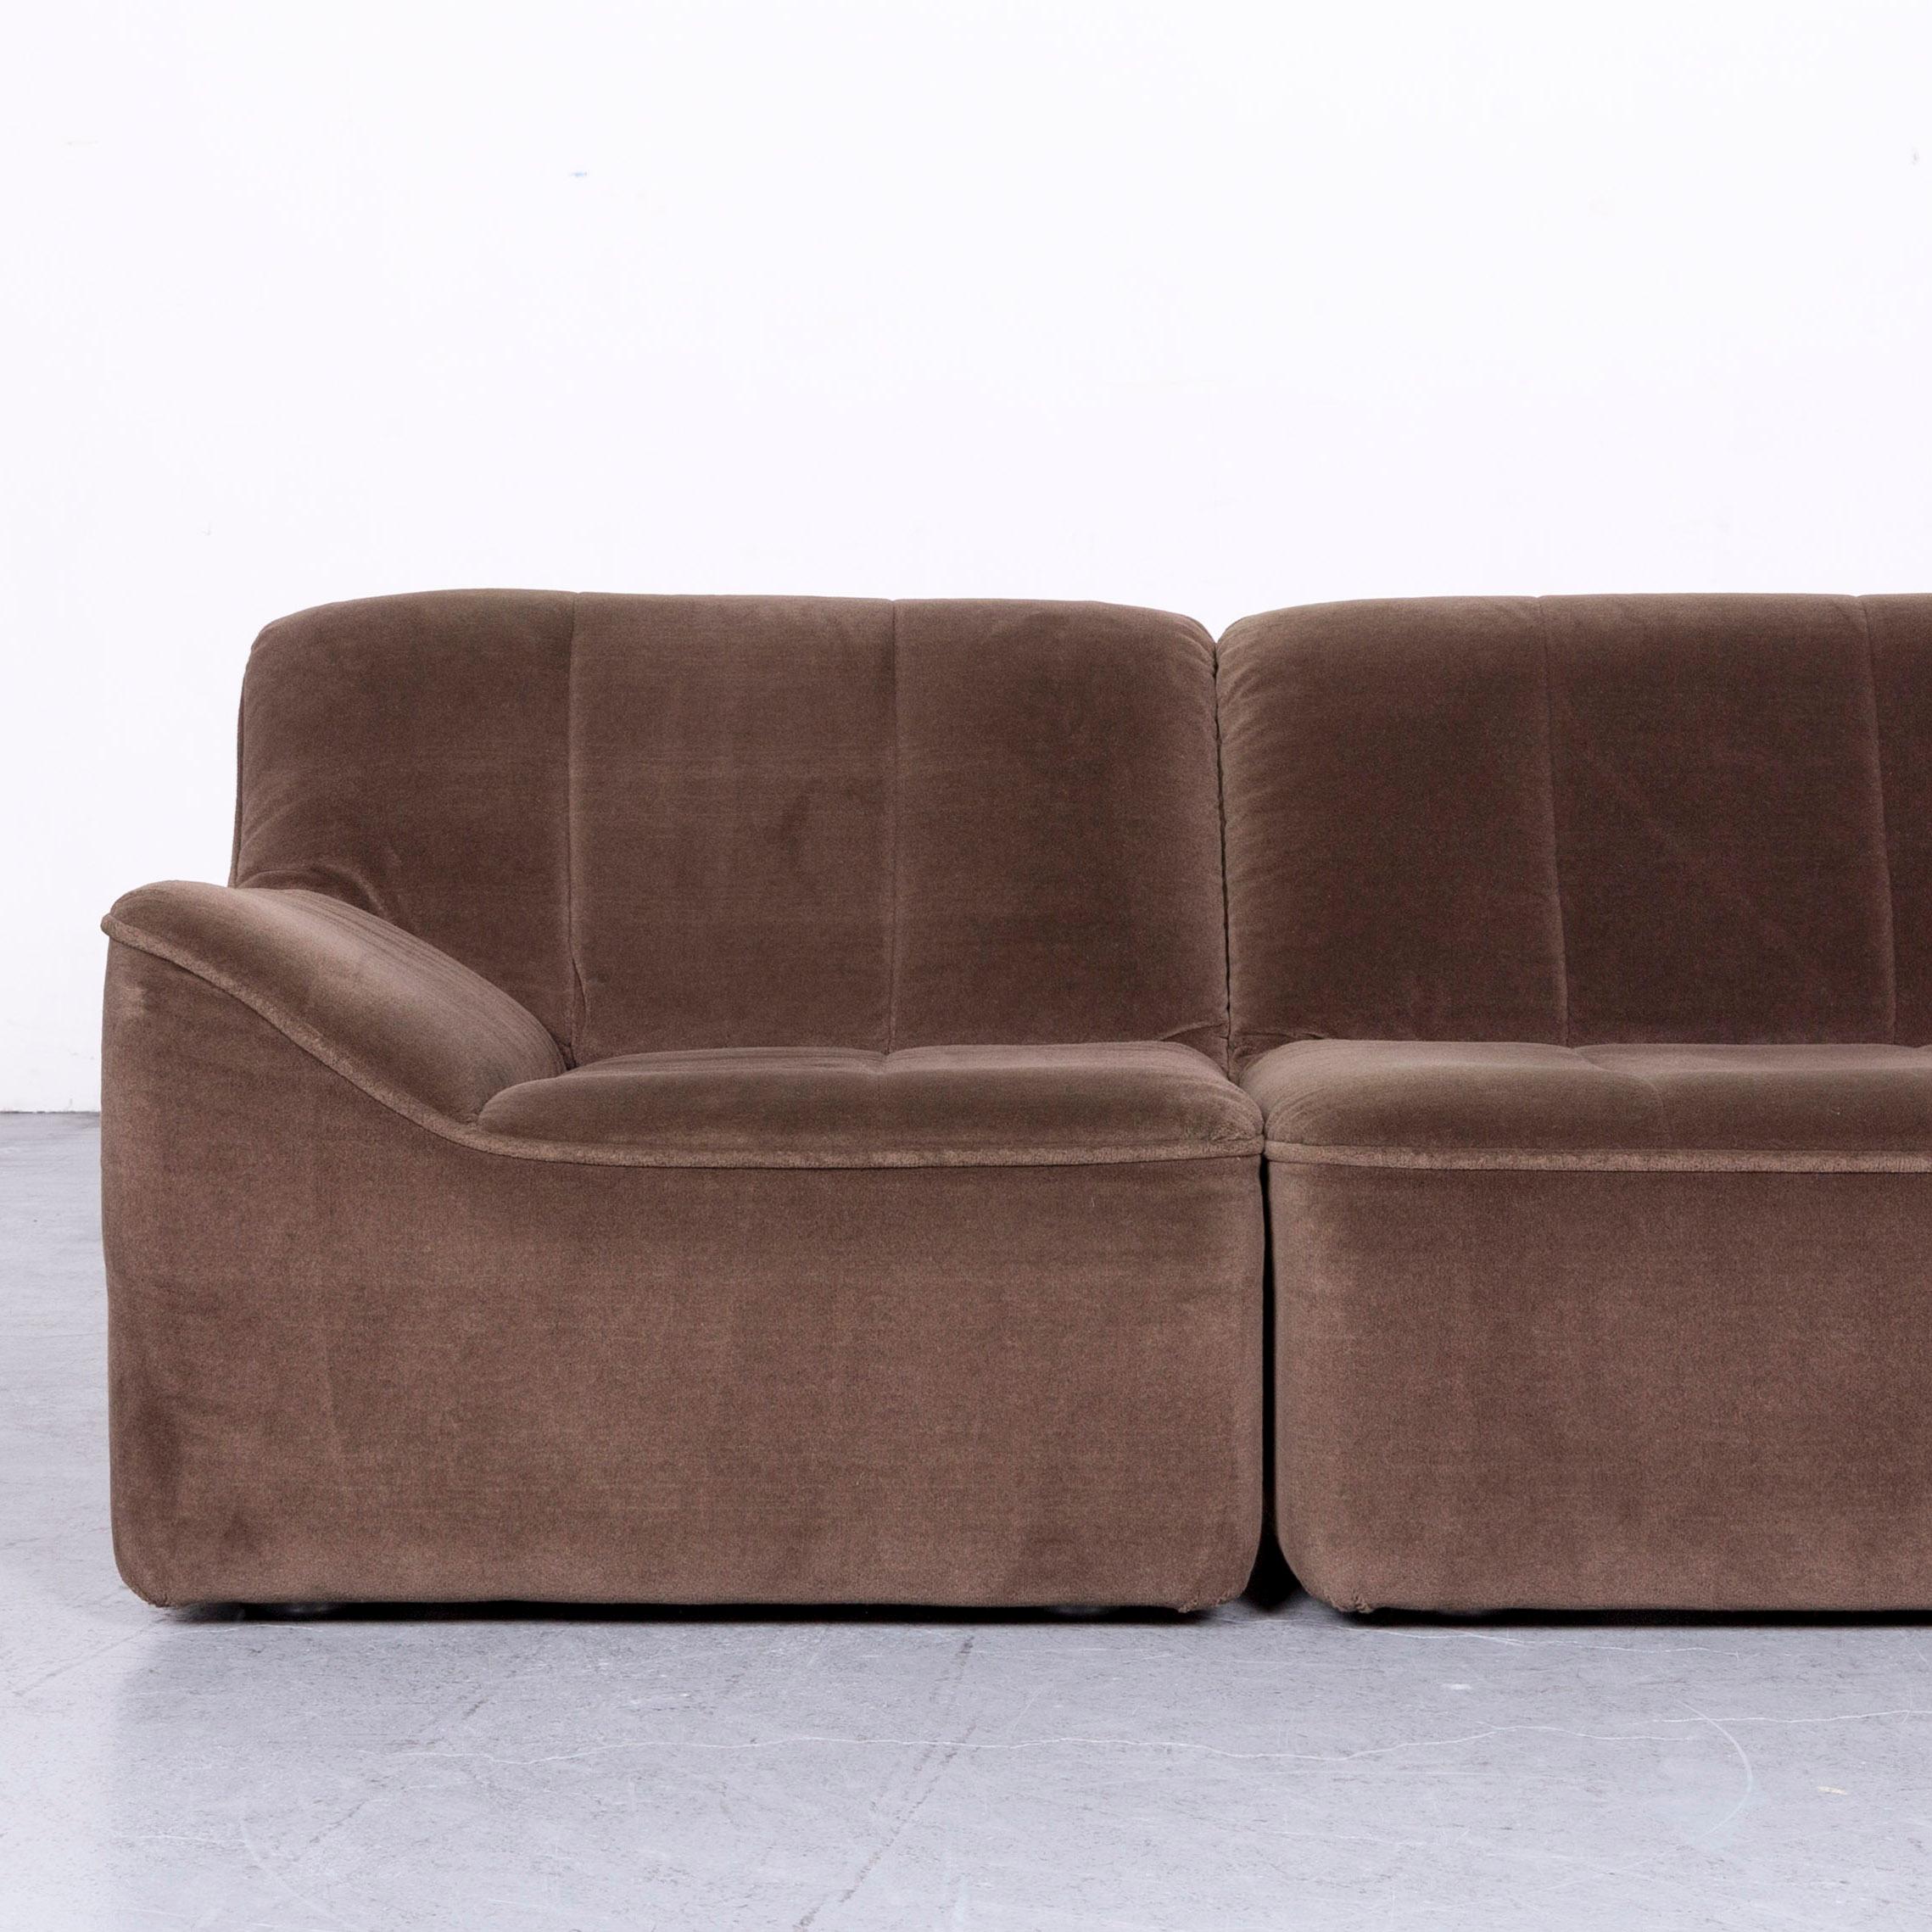 COR Designer Fabric Sofa Brown Three-Seat Couch In Good Condition For Sale In Cologne, DE